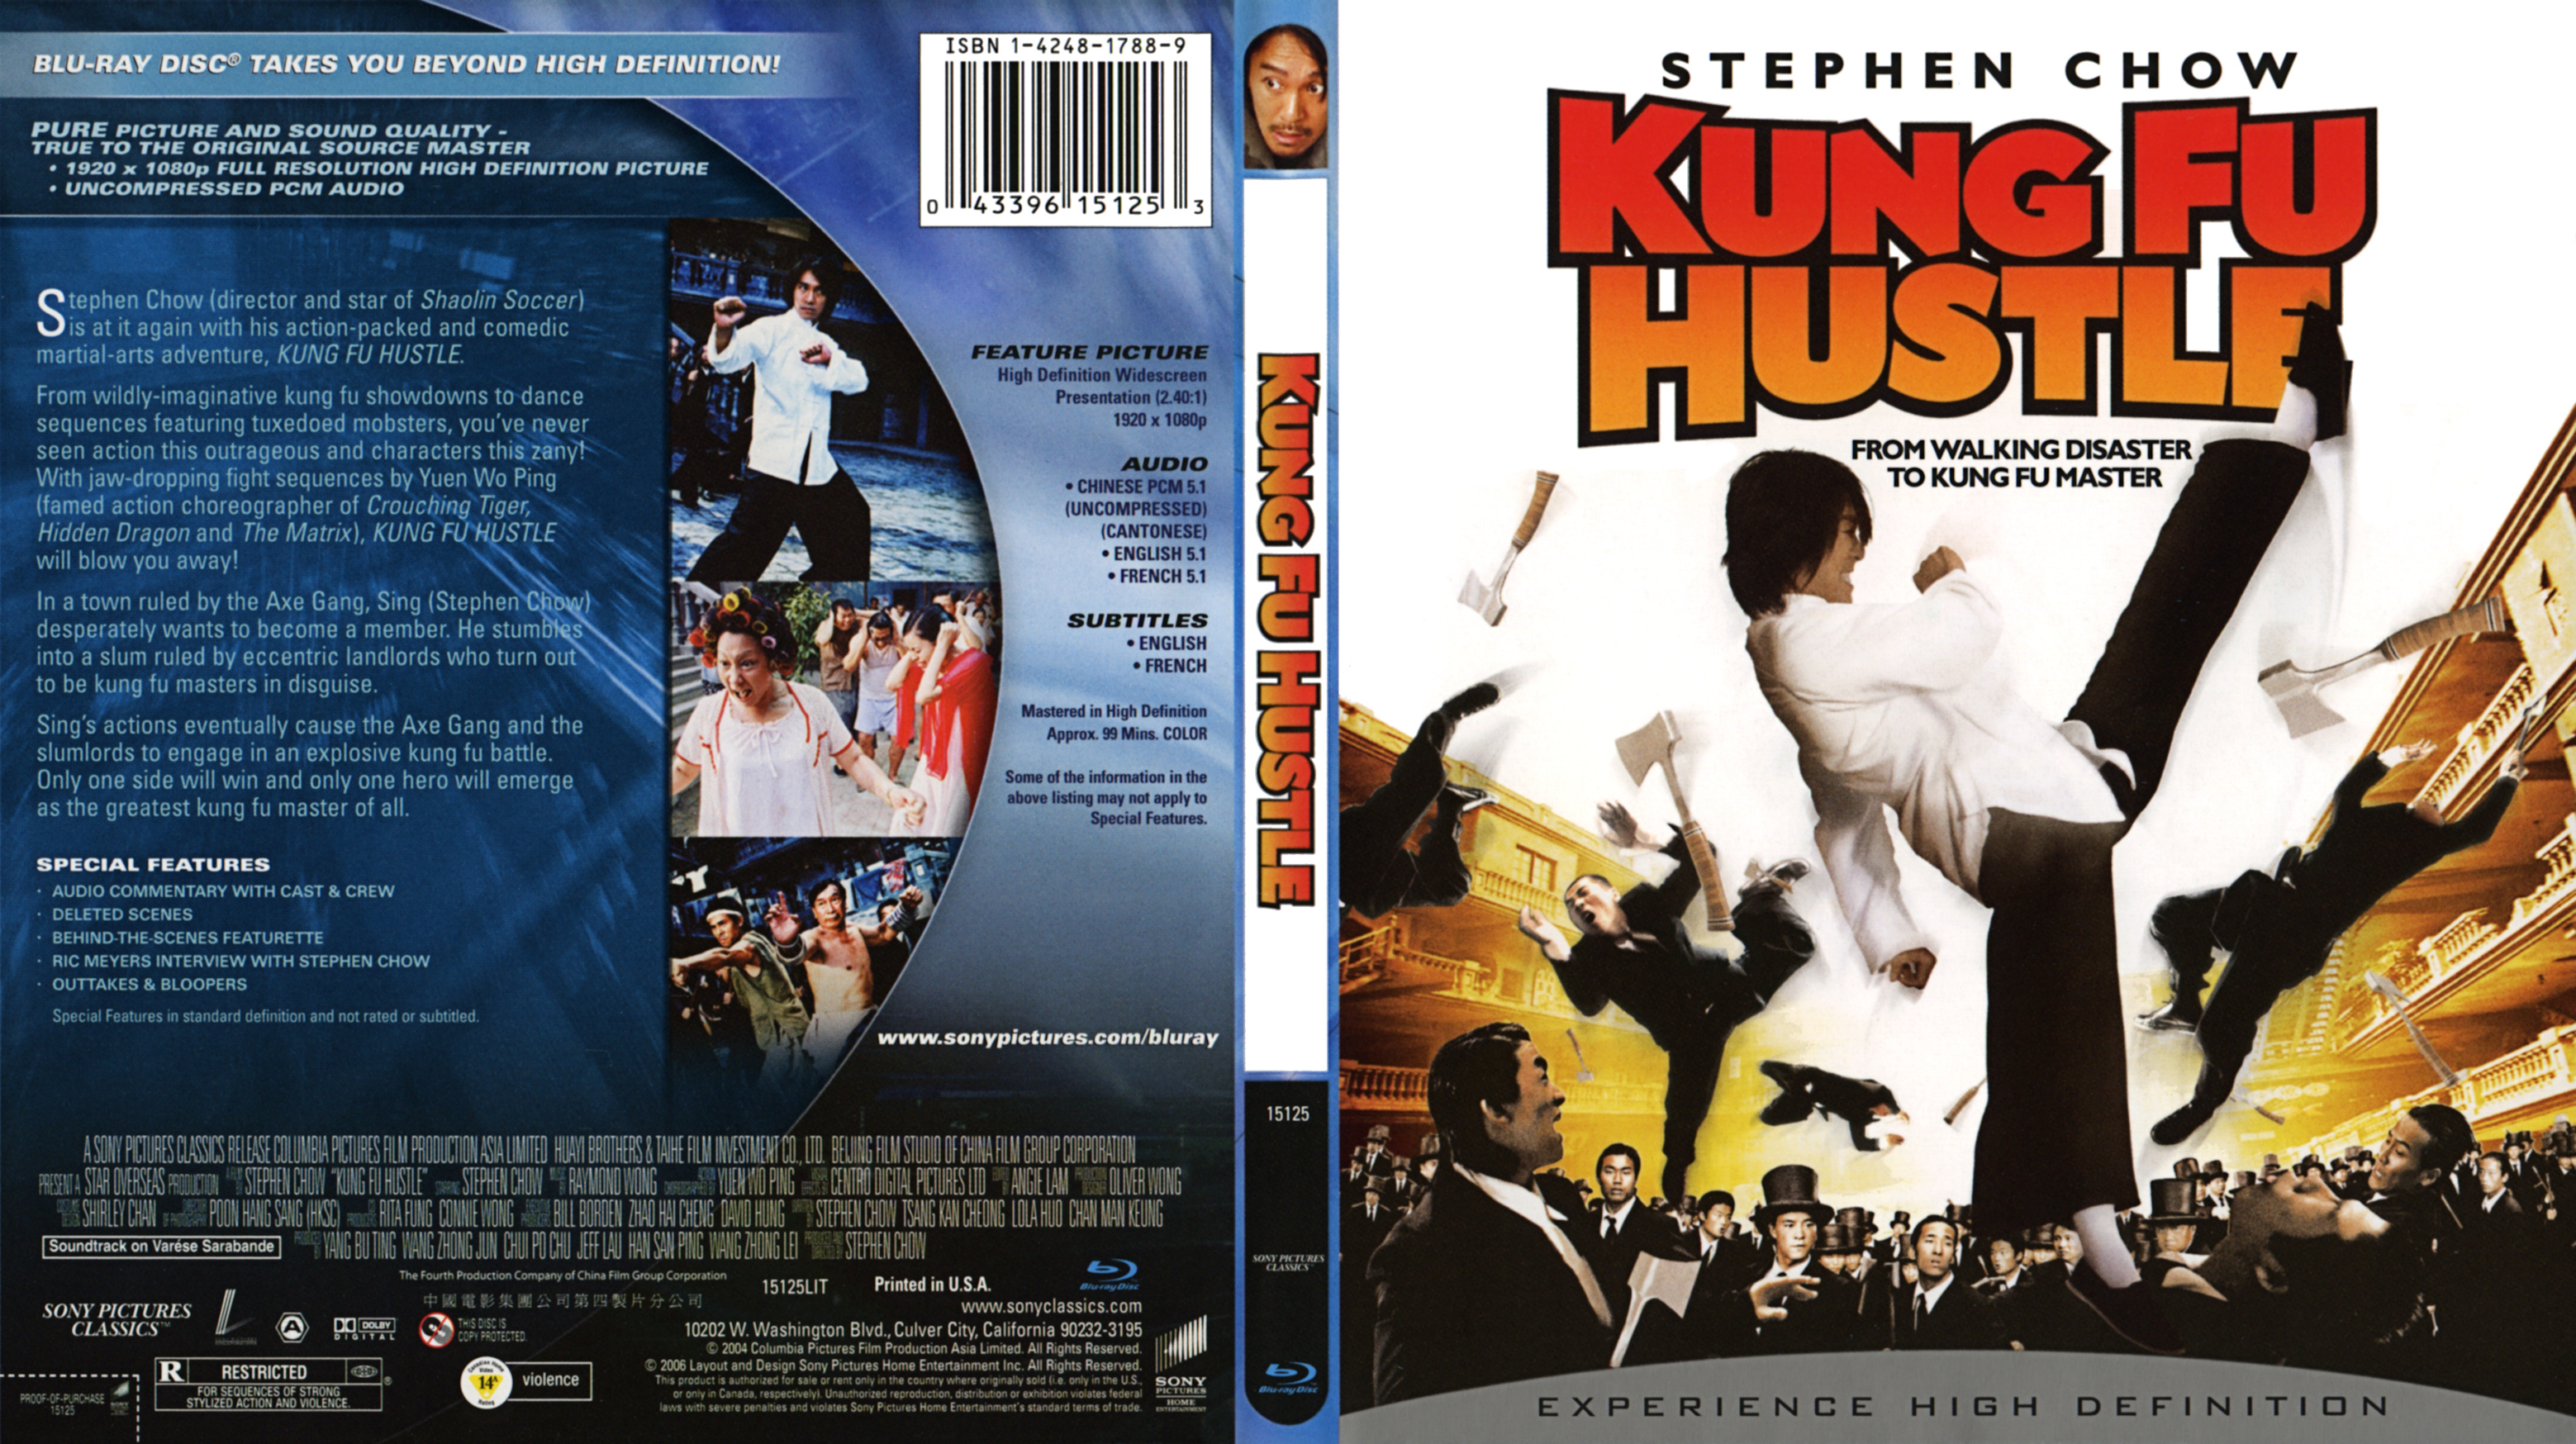 Кунг фу на английском языке. Kung Fu Hustle (2004) Cover. NES обложка кунг фу. Разборки в стиле кунг-фу фото.